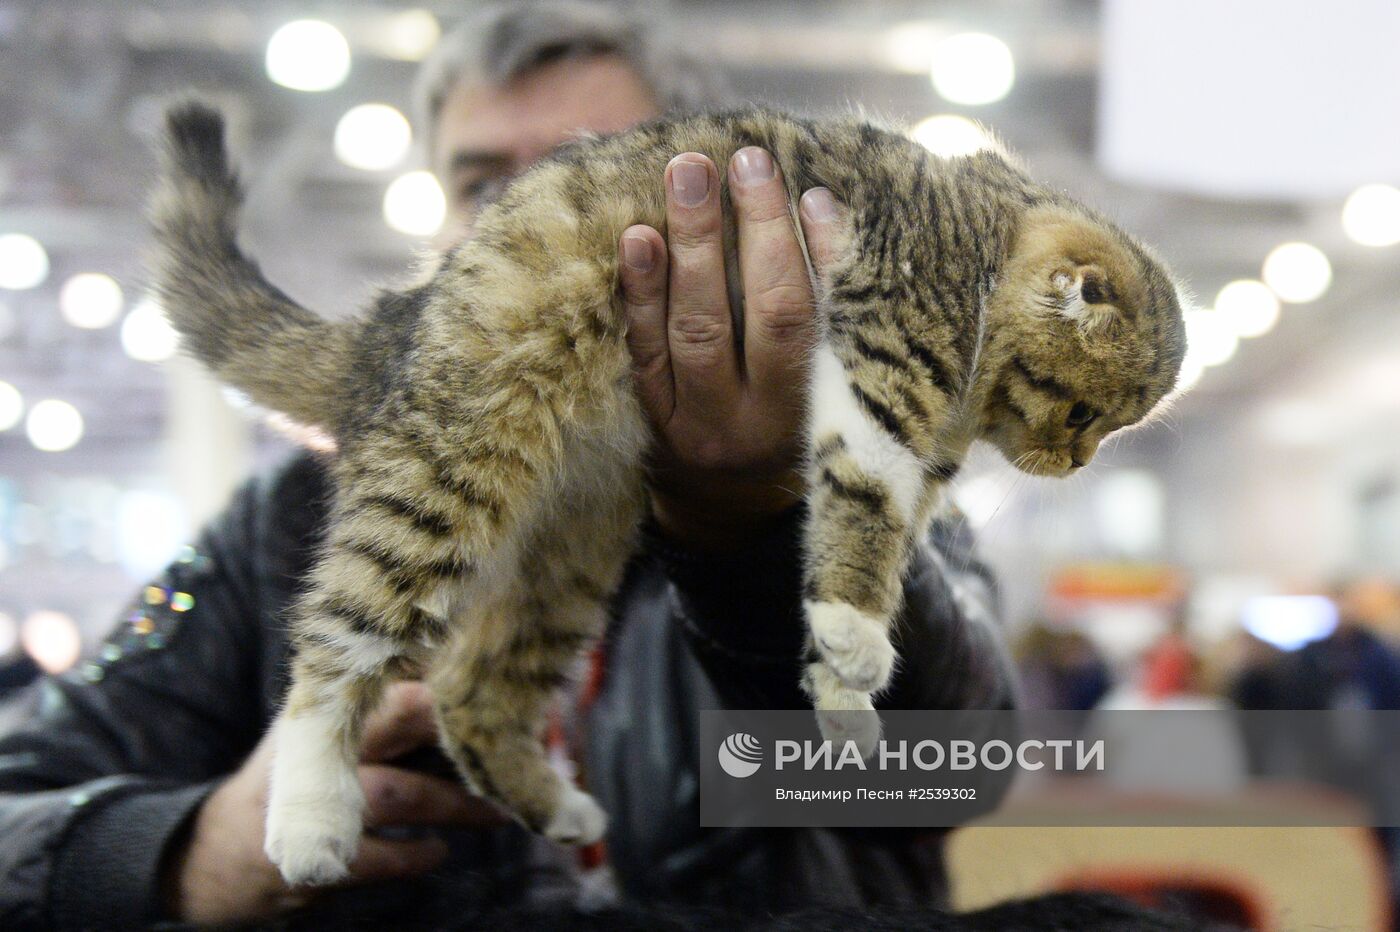 XIII Международная выставка кошек "Гран-при Royal Canin 2014"